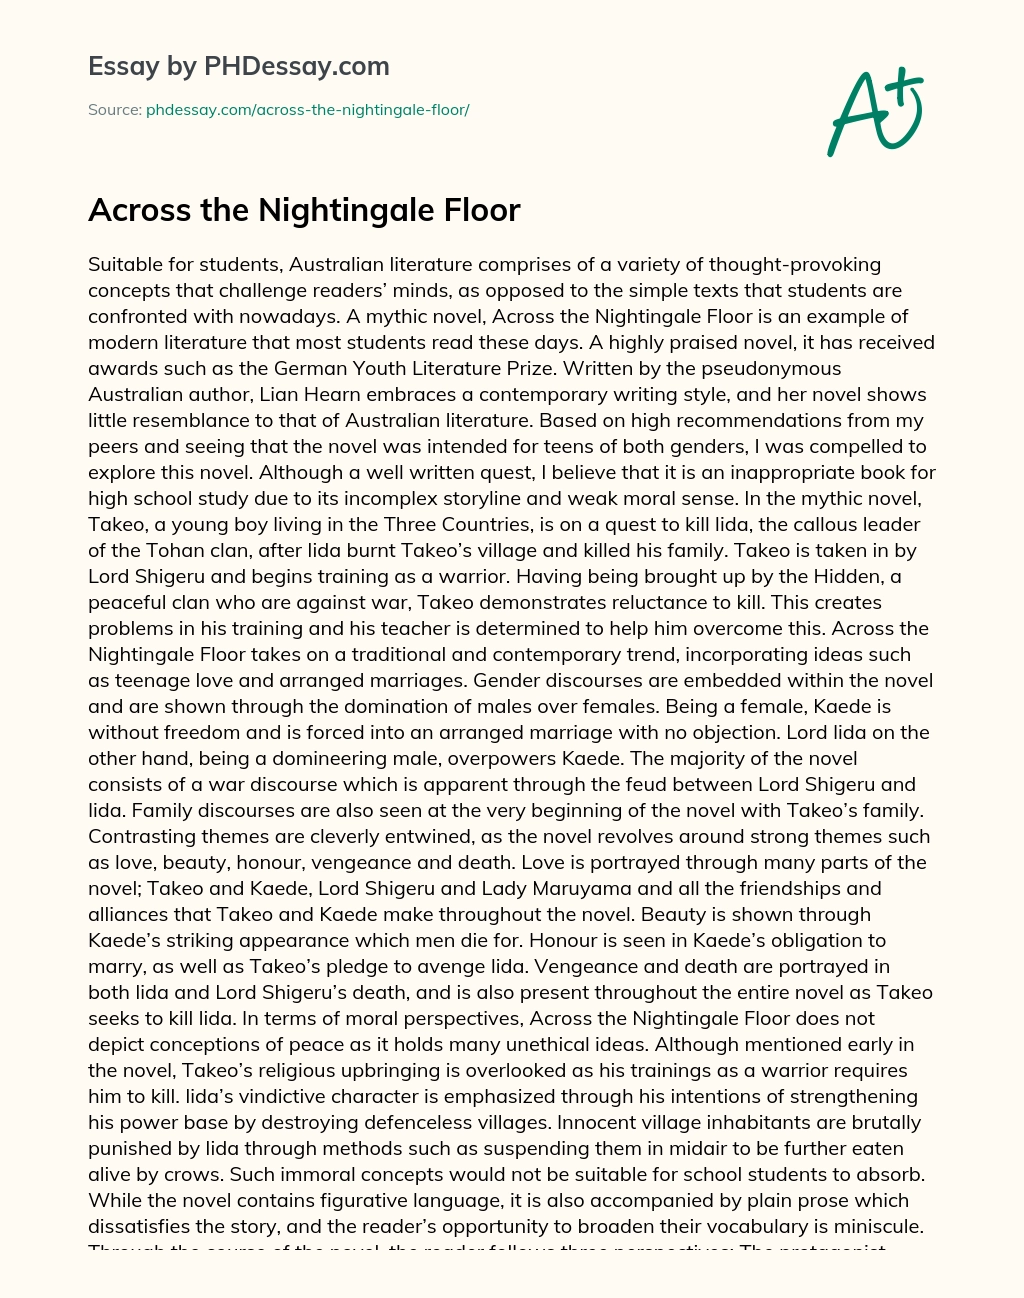 Across the Nightingale Floor essay